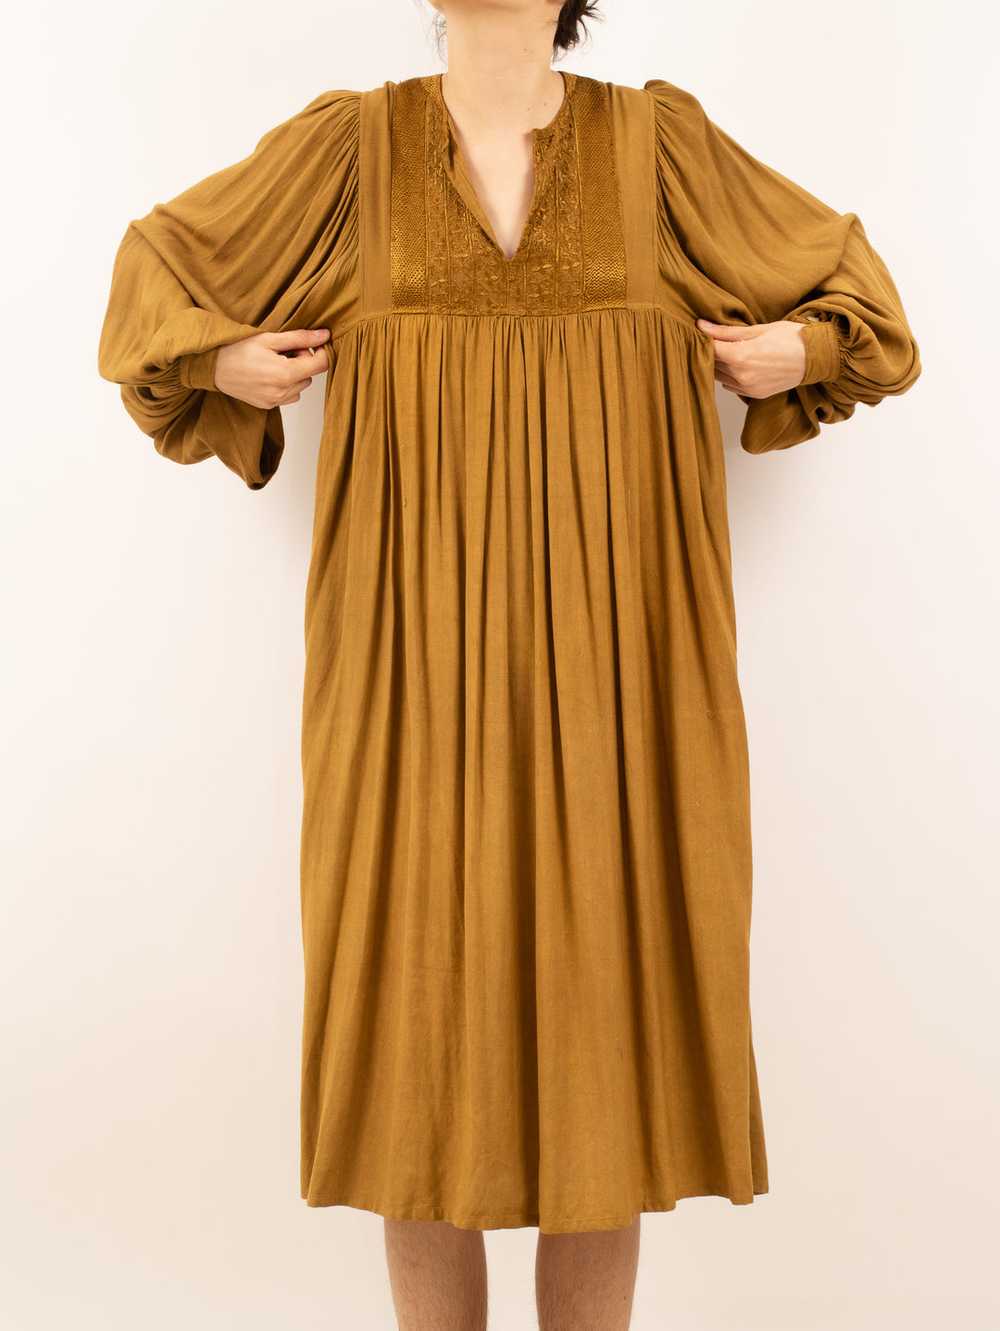 1970's golden caftan dress - image 3